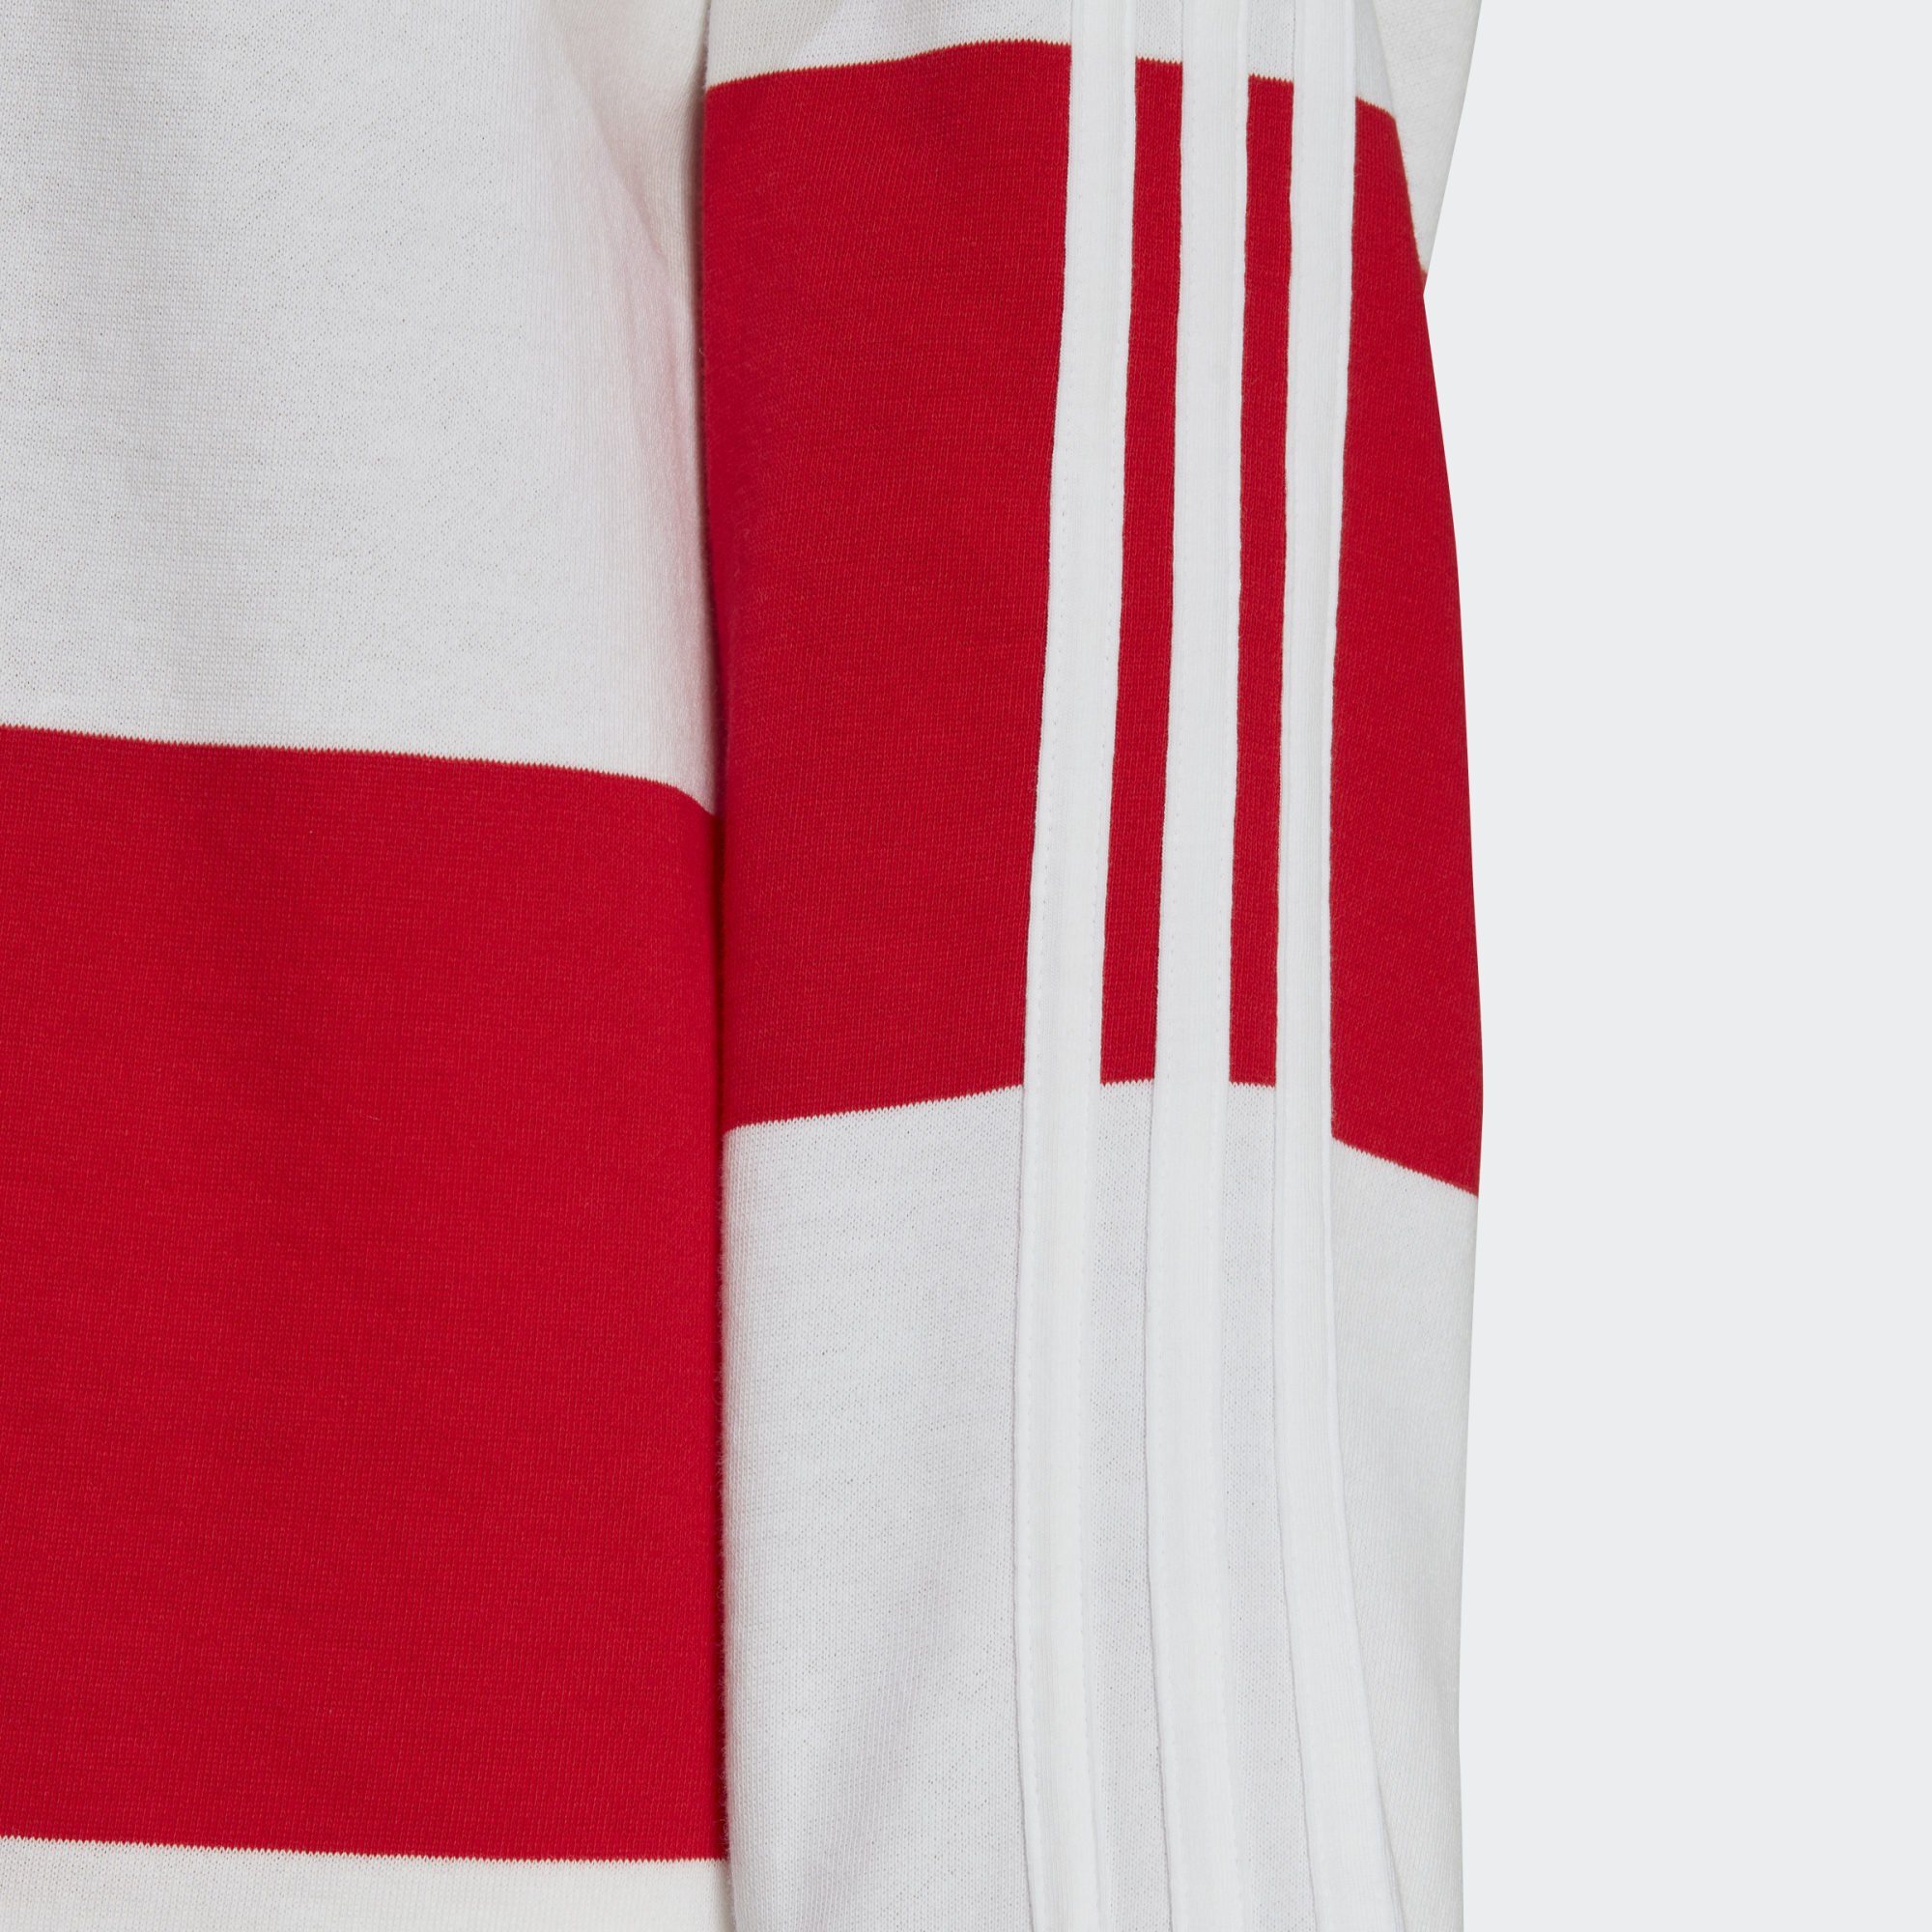 Originals / Vivid Sweatshirt LONGSLEEVE White Red adidas STRIPED